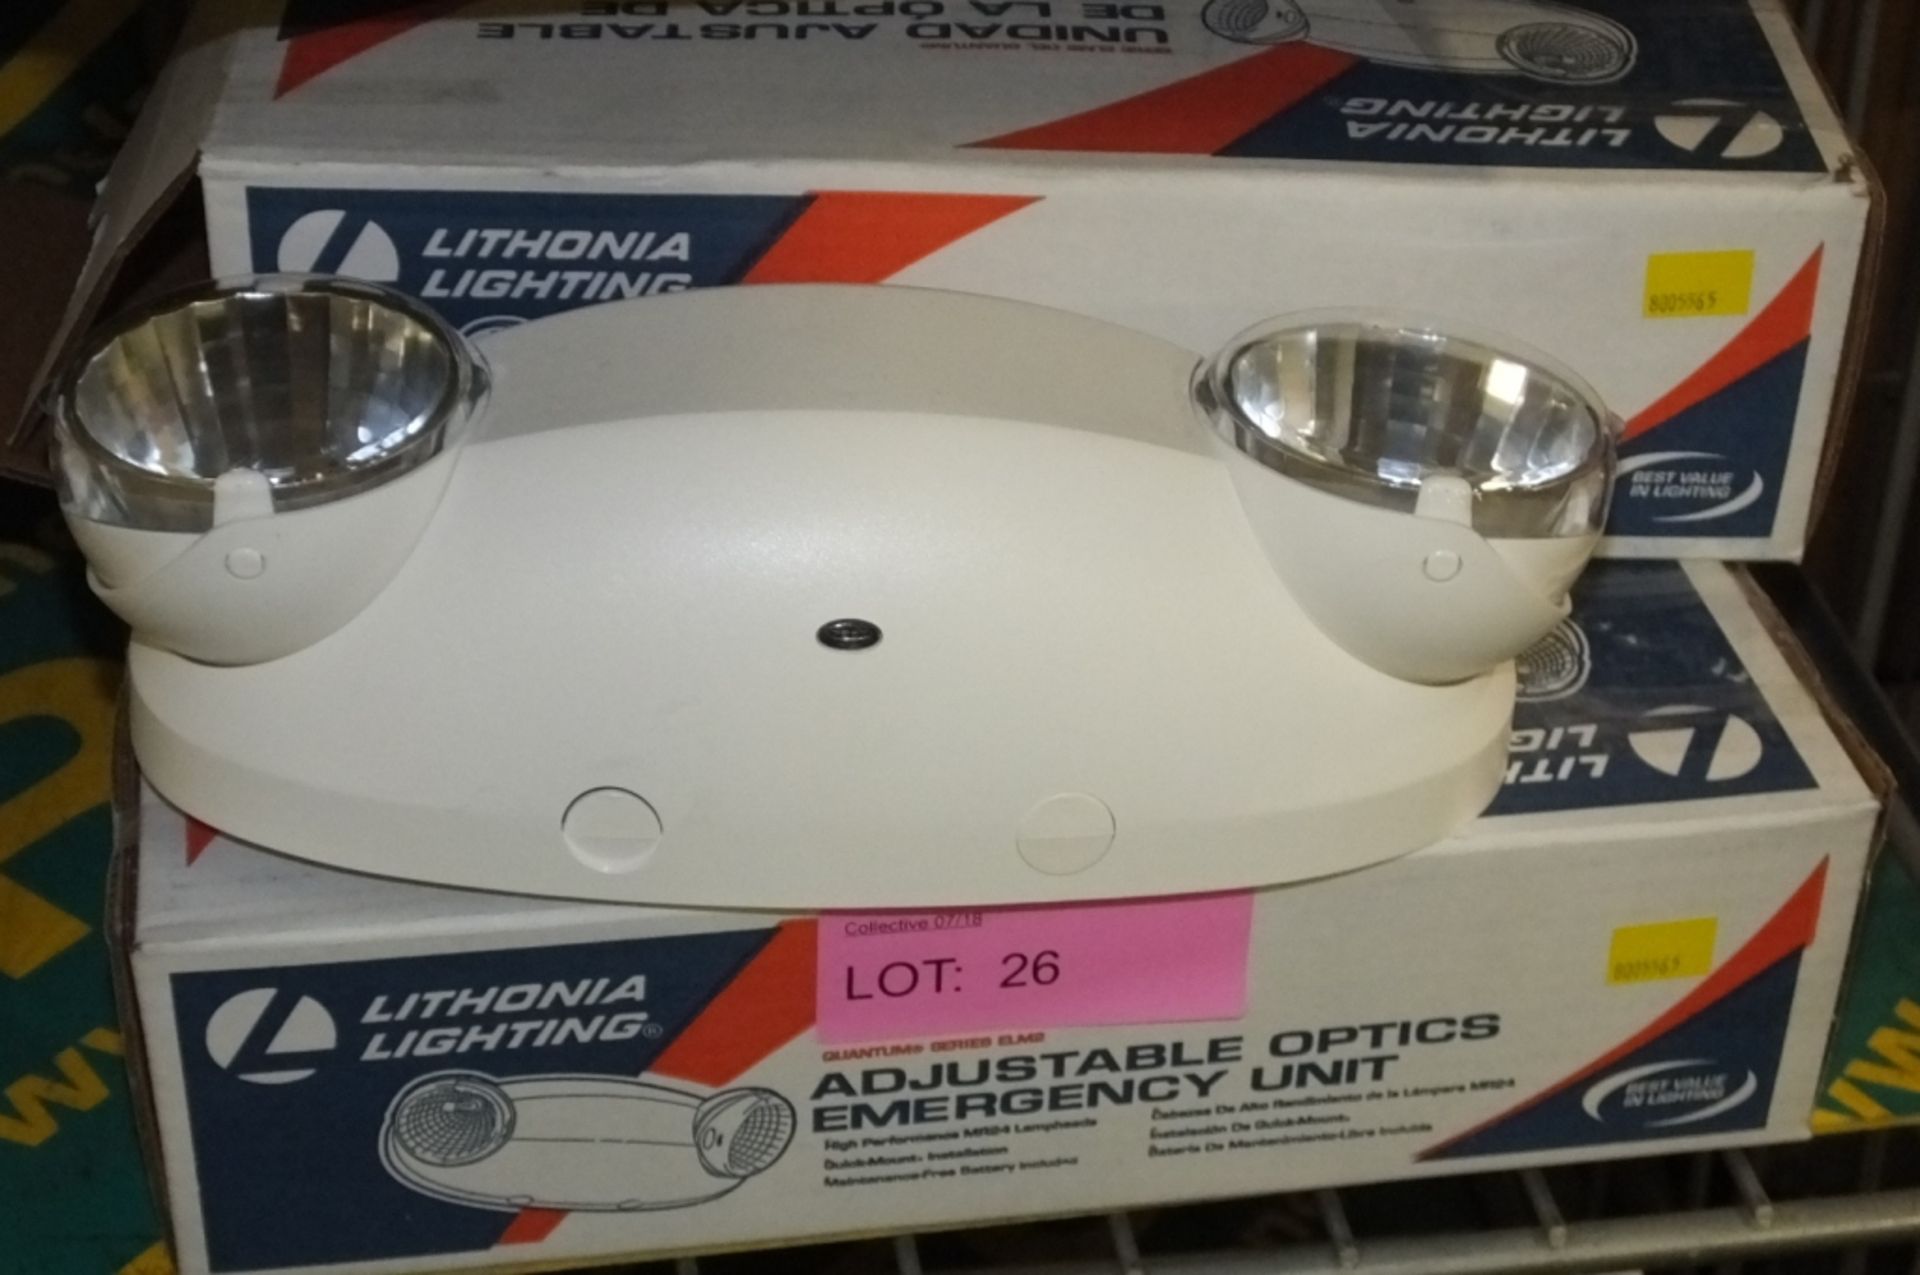 3x Lithonia Lighting Adjustable Optics Emergency LIghting units - Image 3 of 3